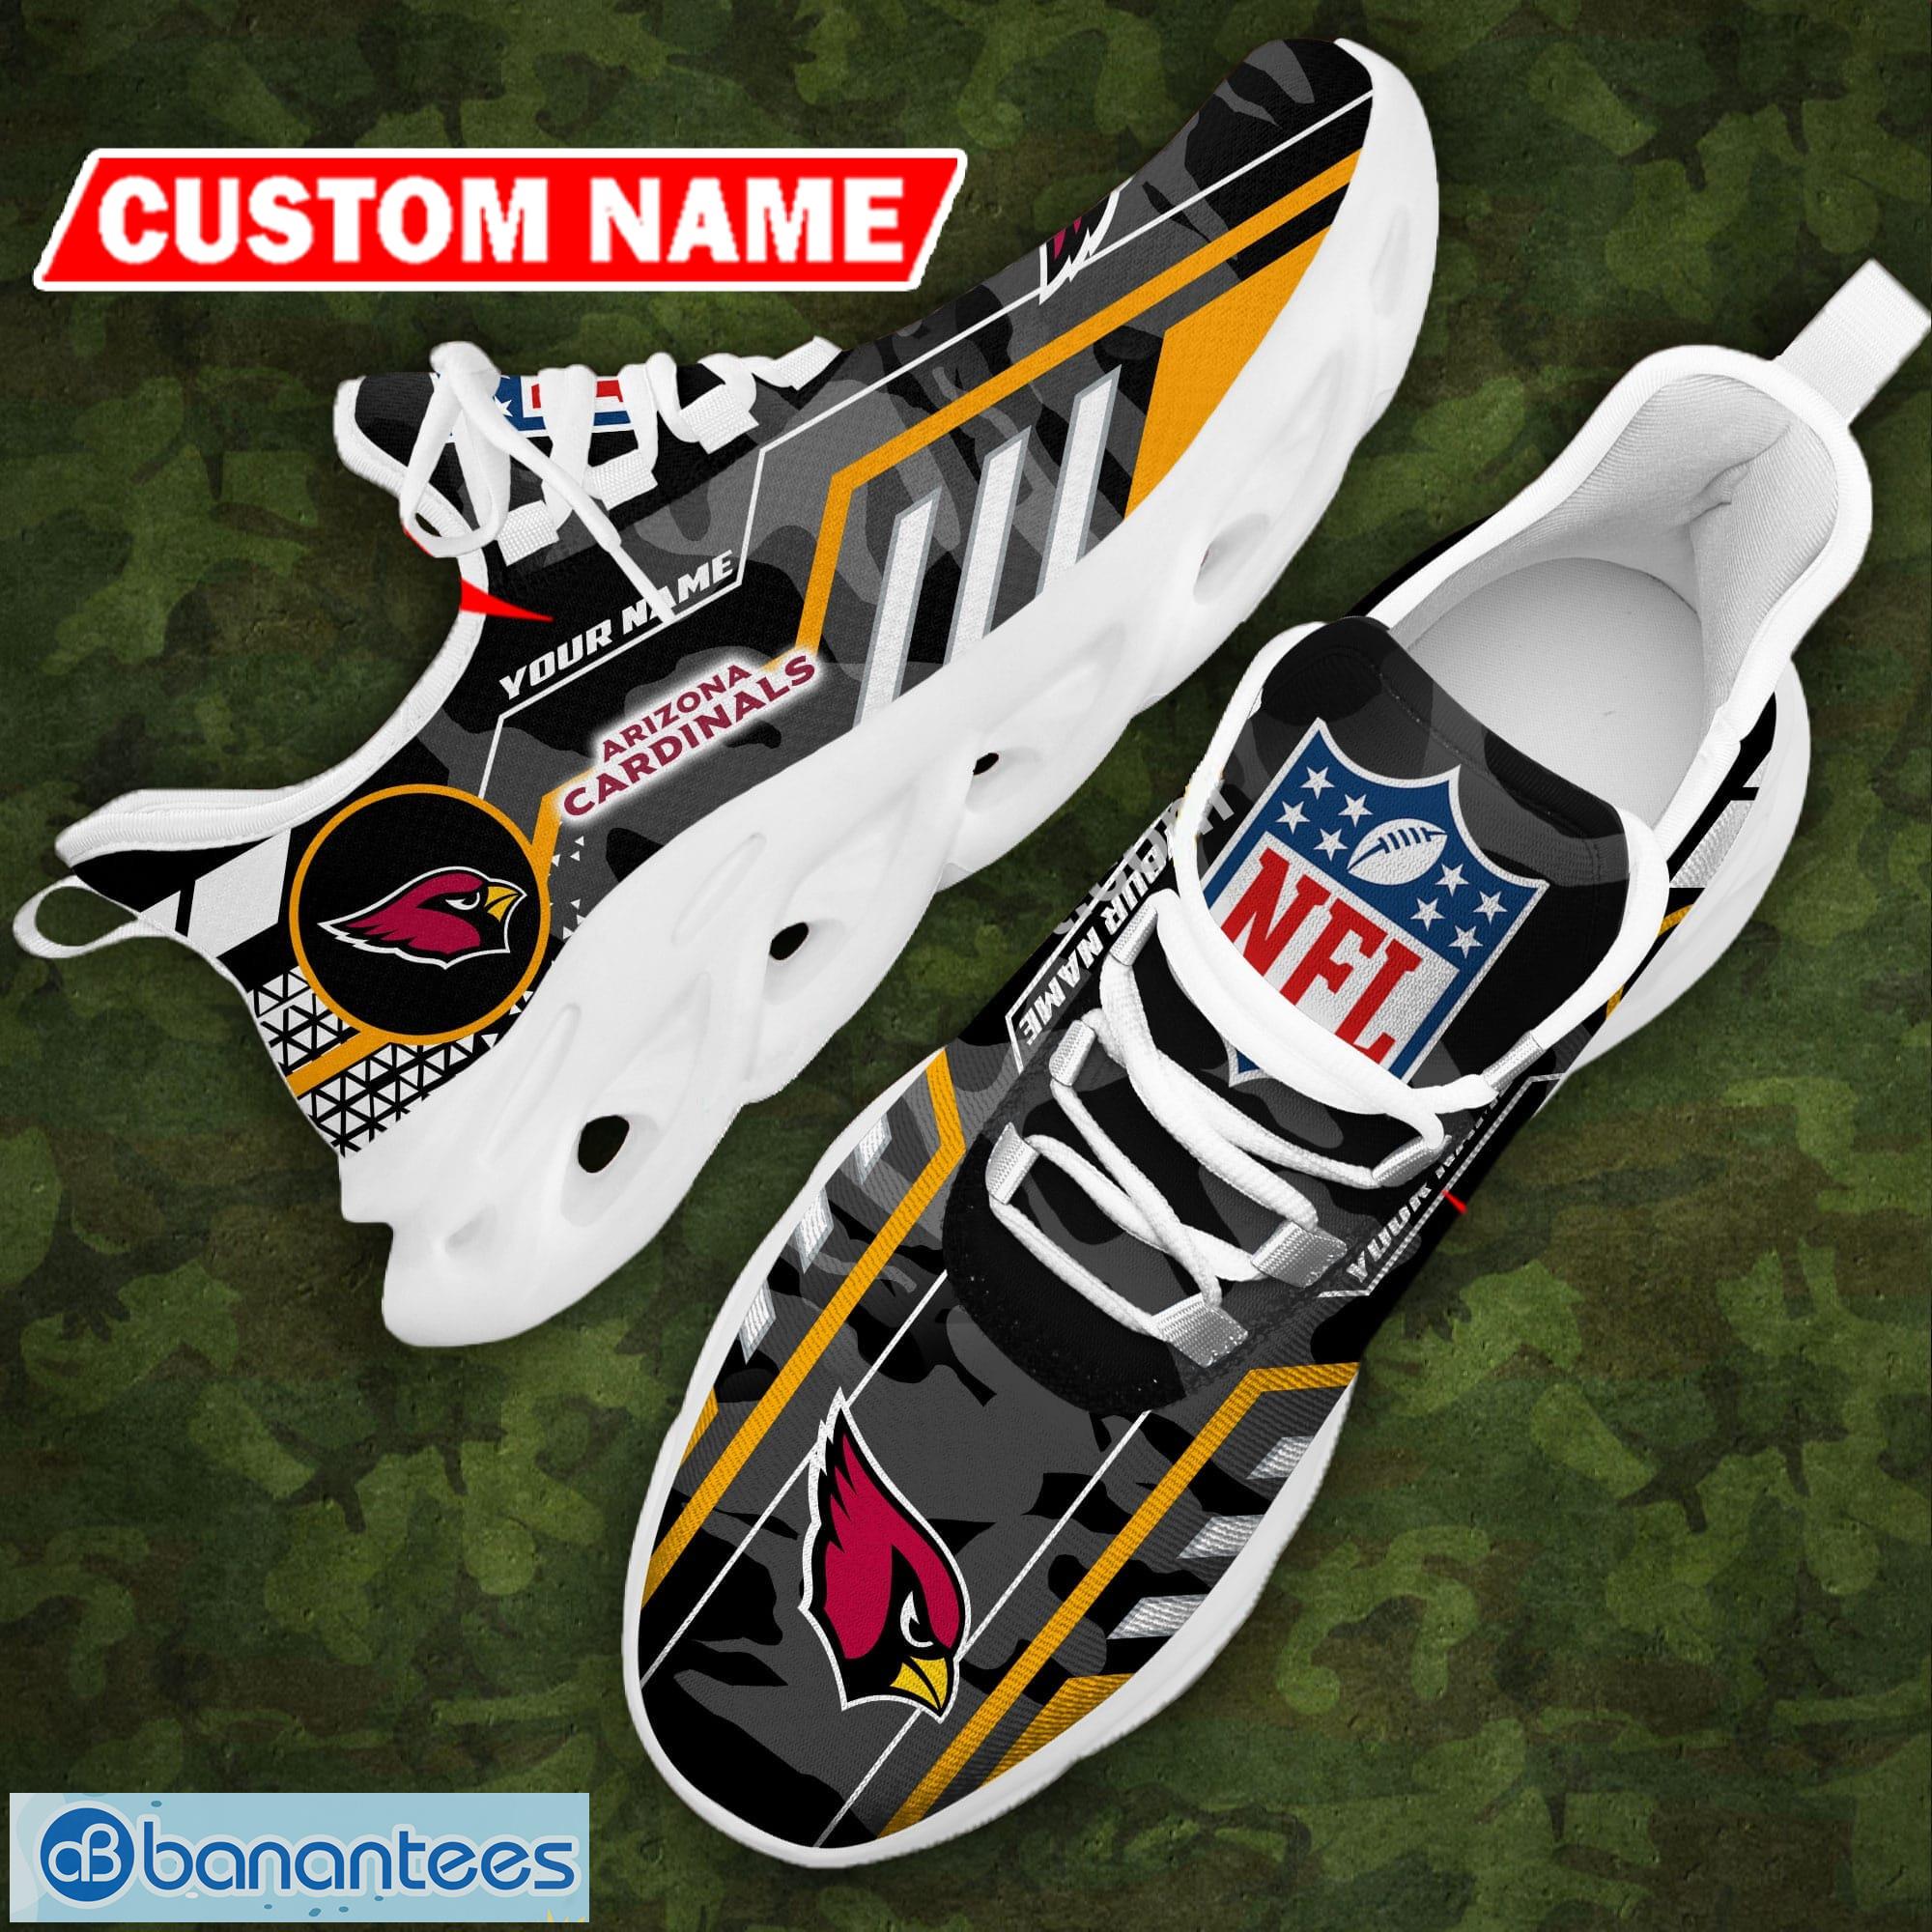 Arizona Cardinals NFL Max Sou Sneakers Running Shoes - Banantees